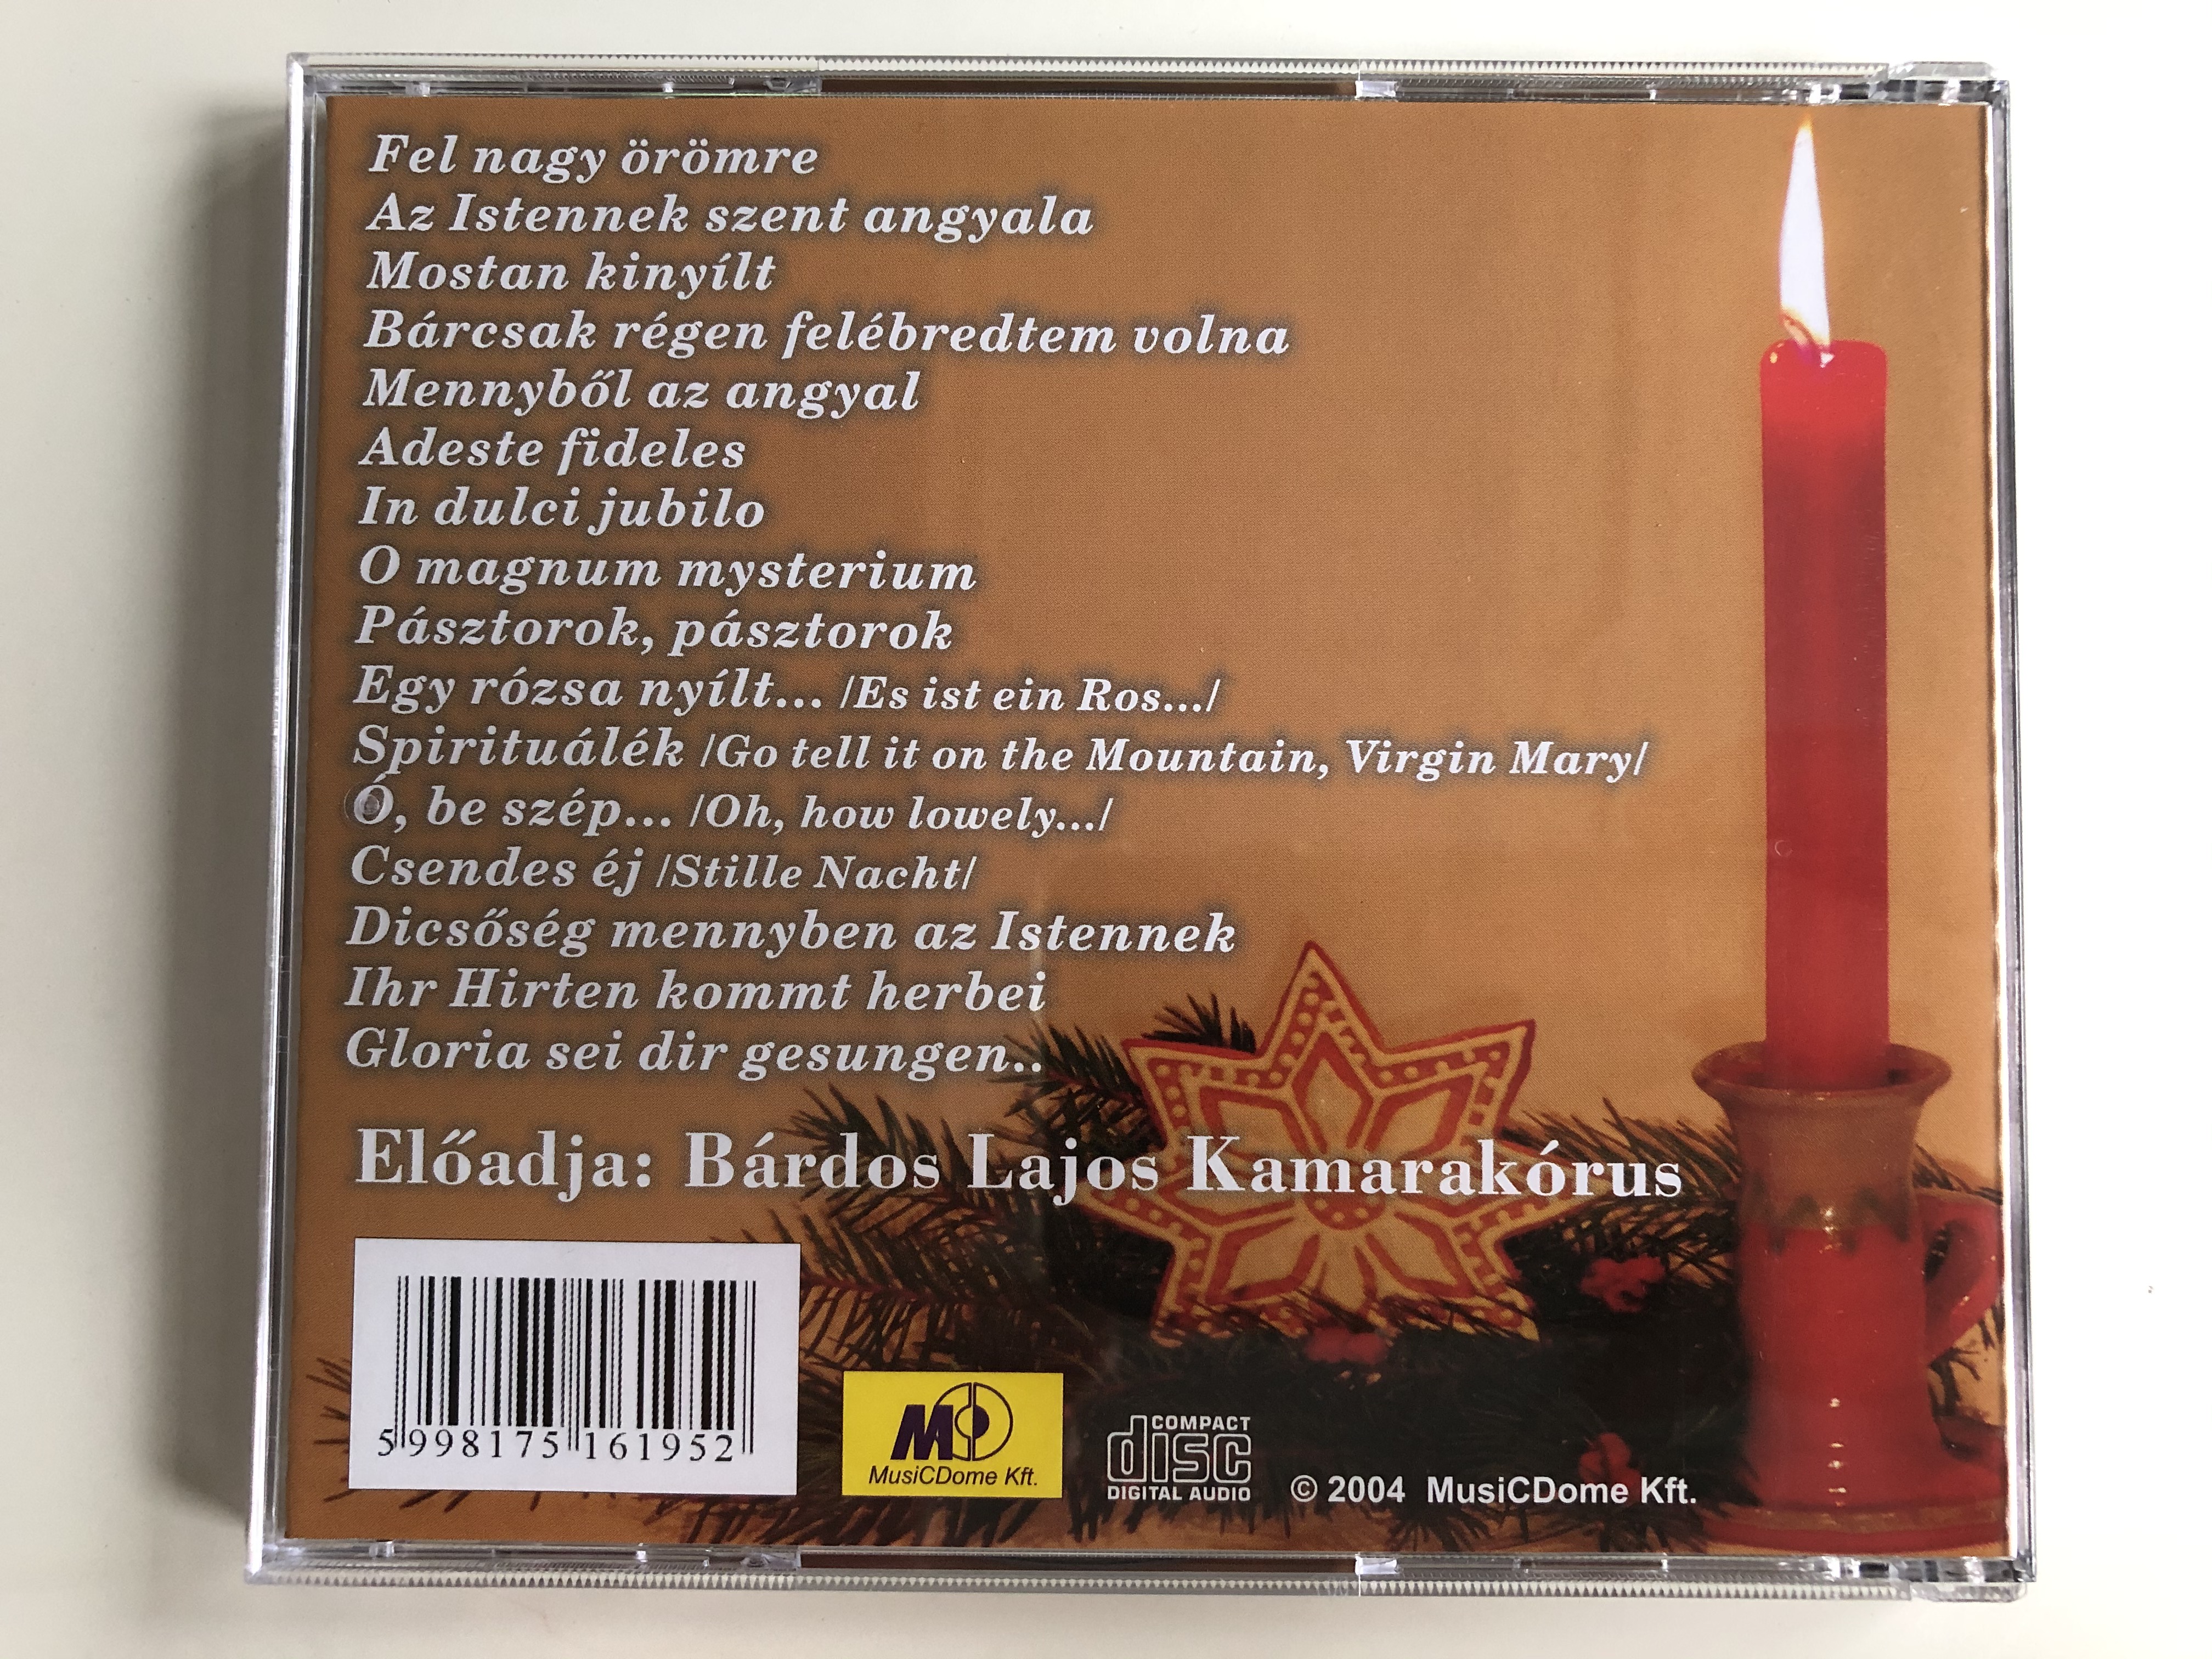 pasztorok-pasztorok-...es-mas-karacsonyi-dalok-musicdome-audio-cd-2004-0302mcd-4-.jpg